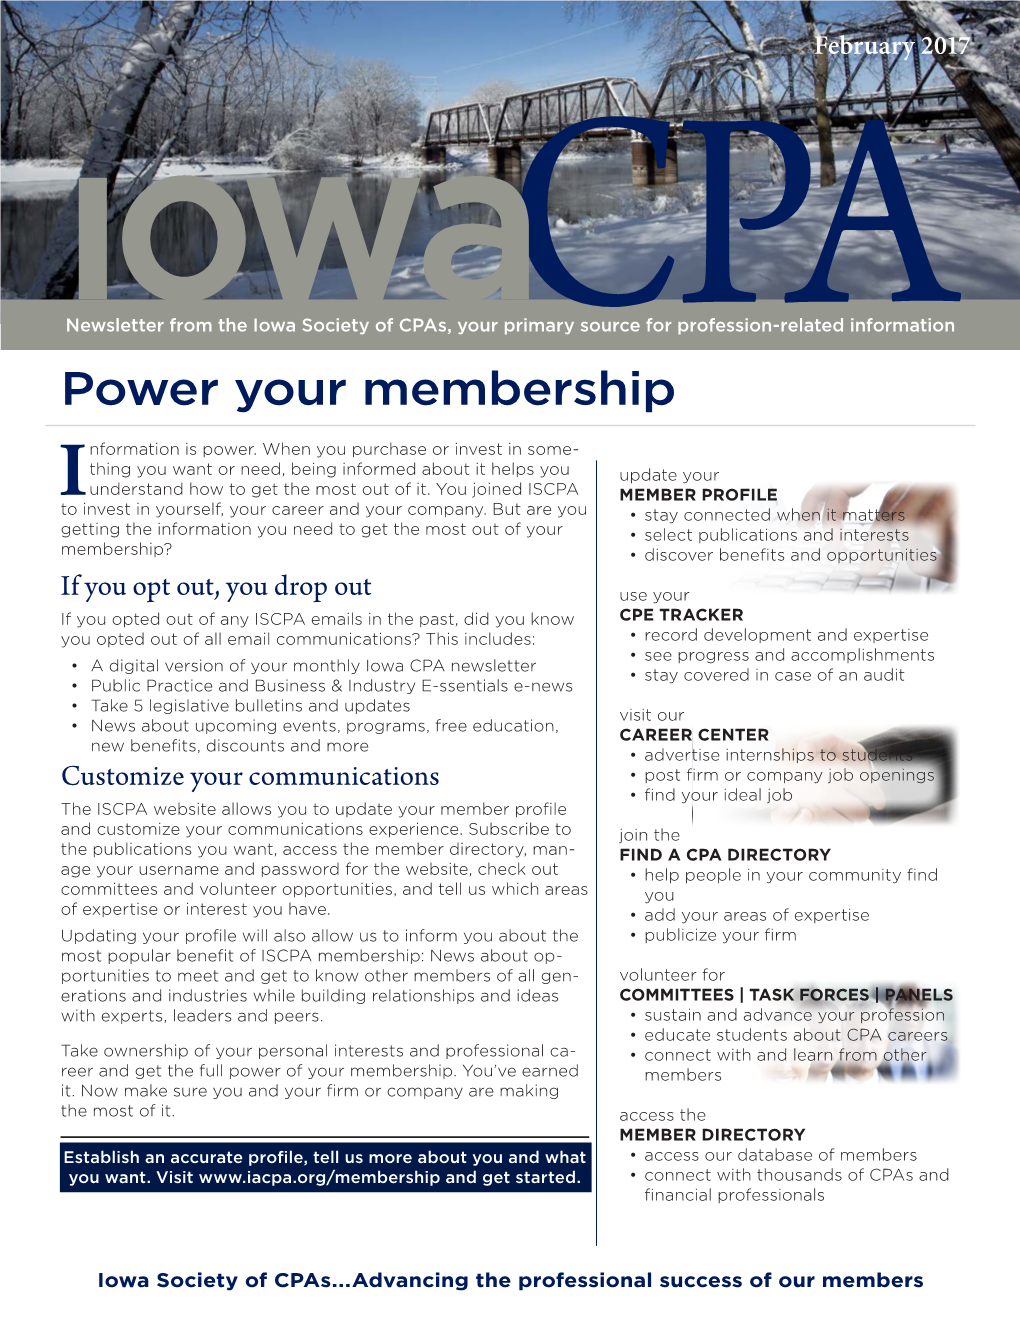 Power Your Membership